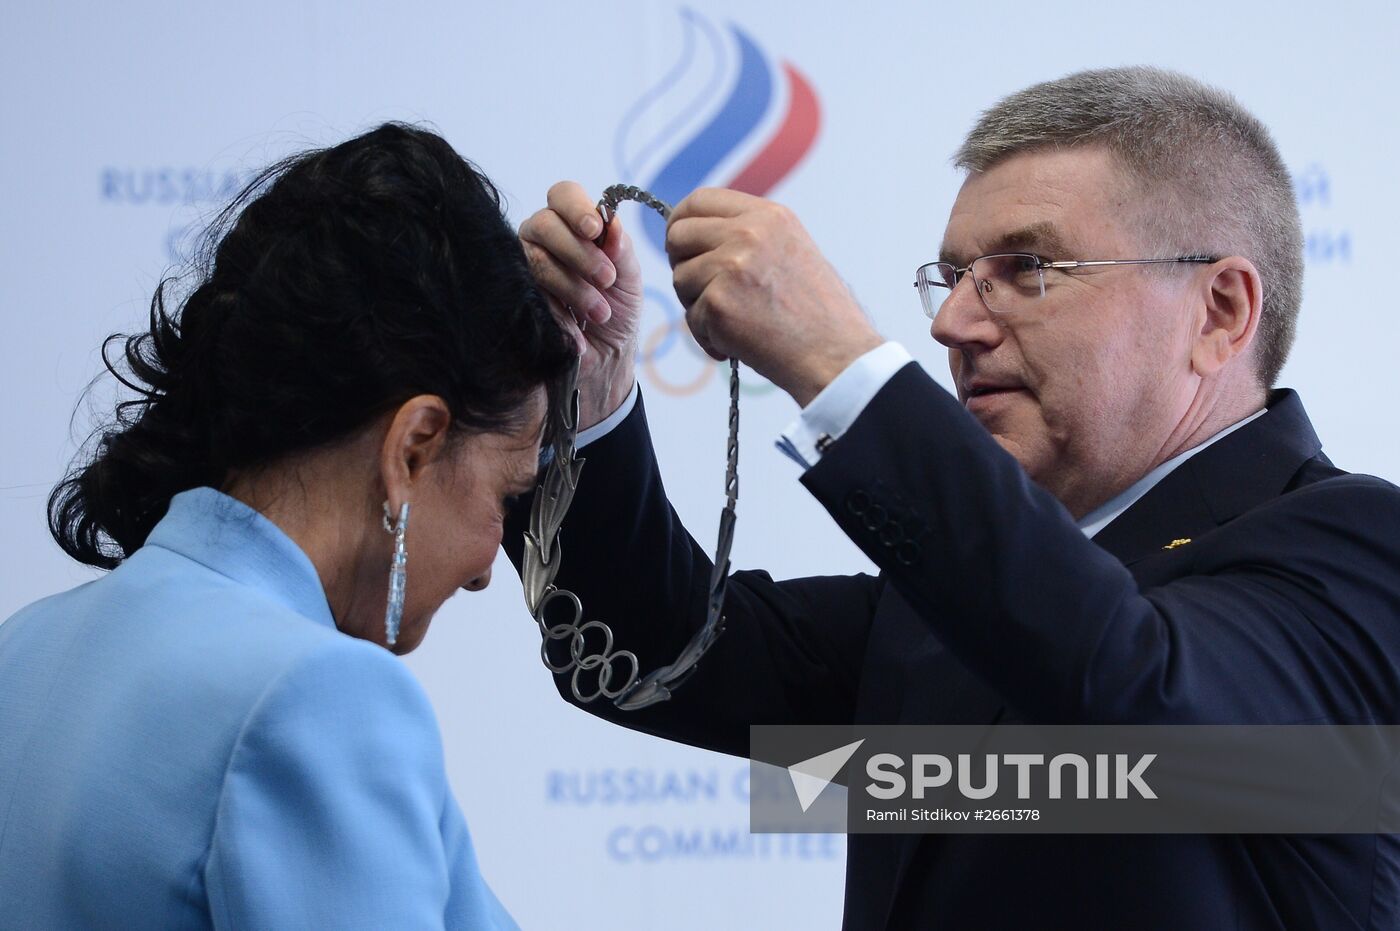 IOC President Thomas Bach presents Olympic Order to RRGF President Irina Viner-Usmanova